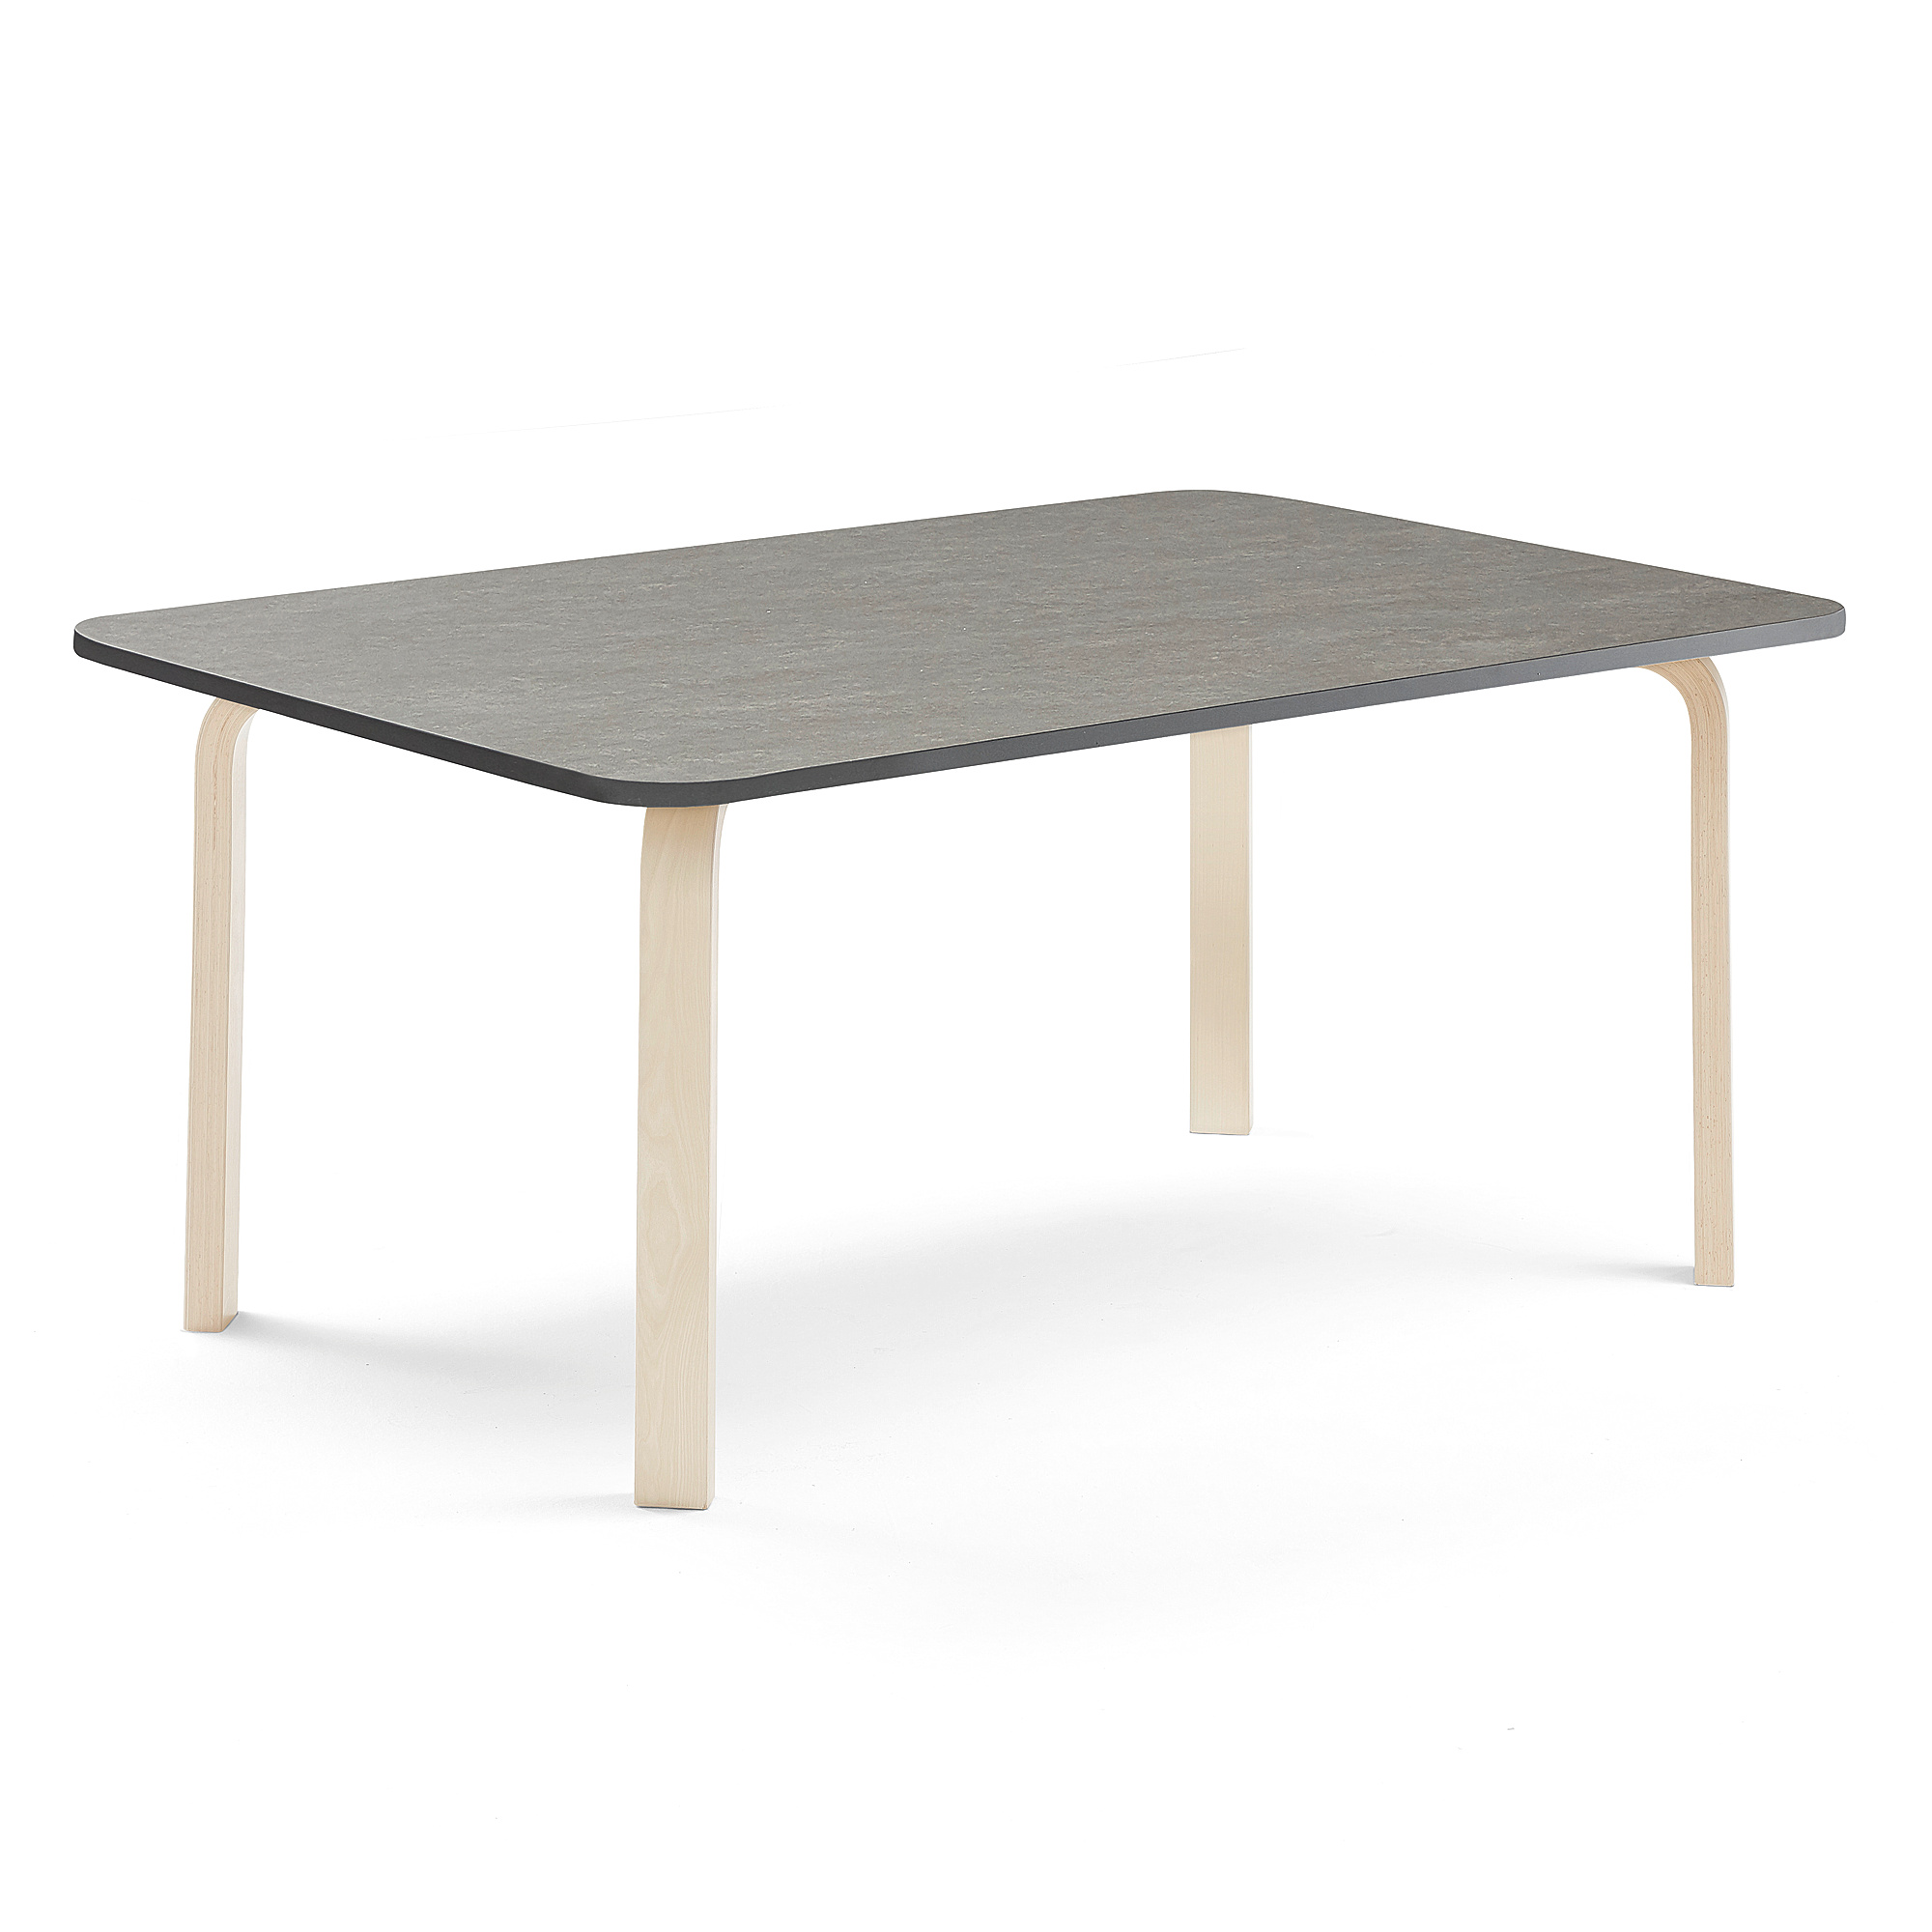 Stůl ELTON, 1800x700x590 mm, bříza, akustické linoleum, tmavě šedá